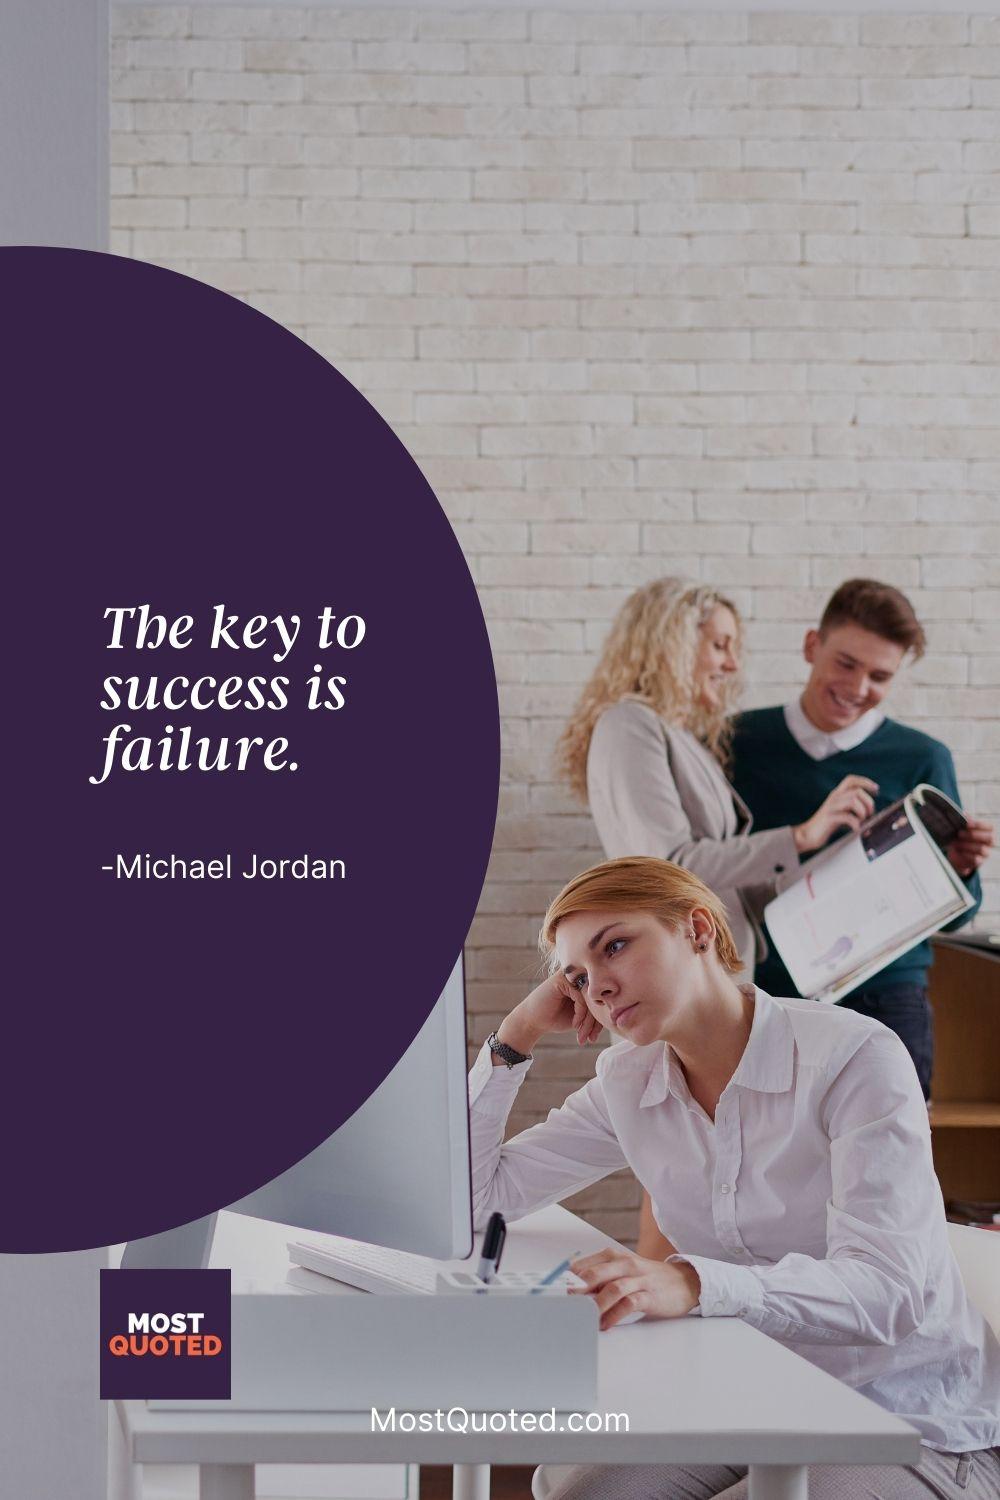 The key to success is failure. - Michael Jordan